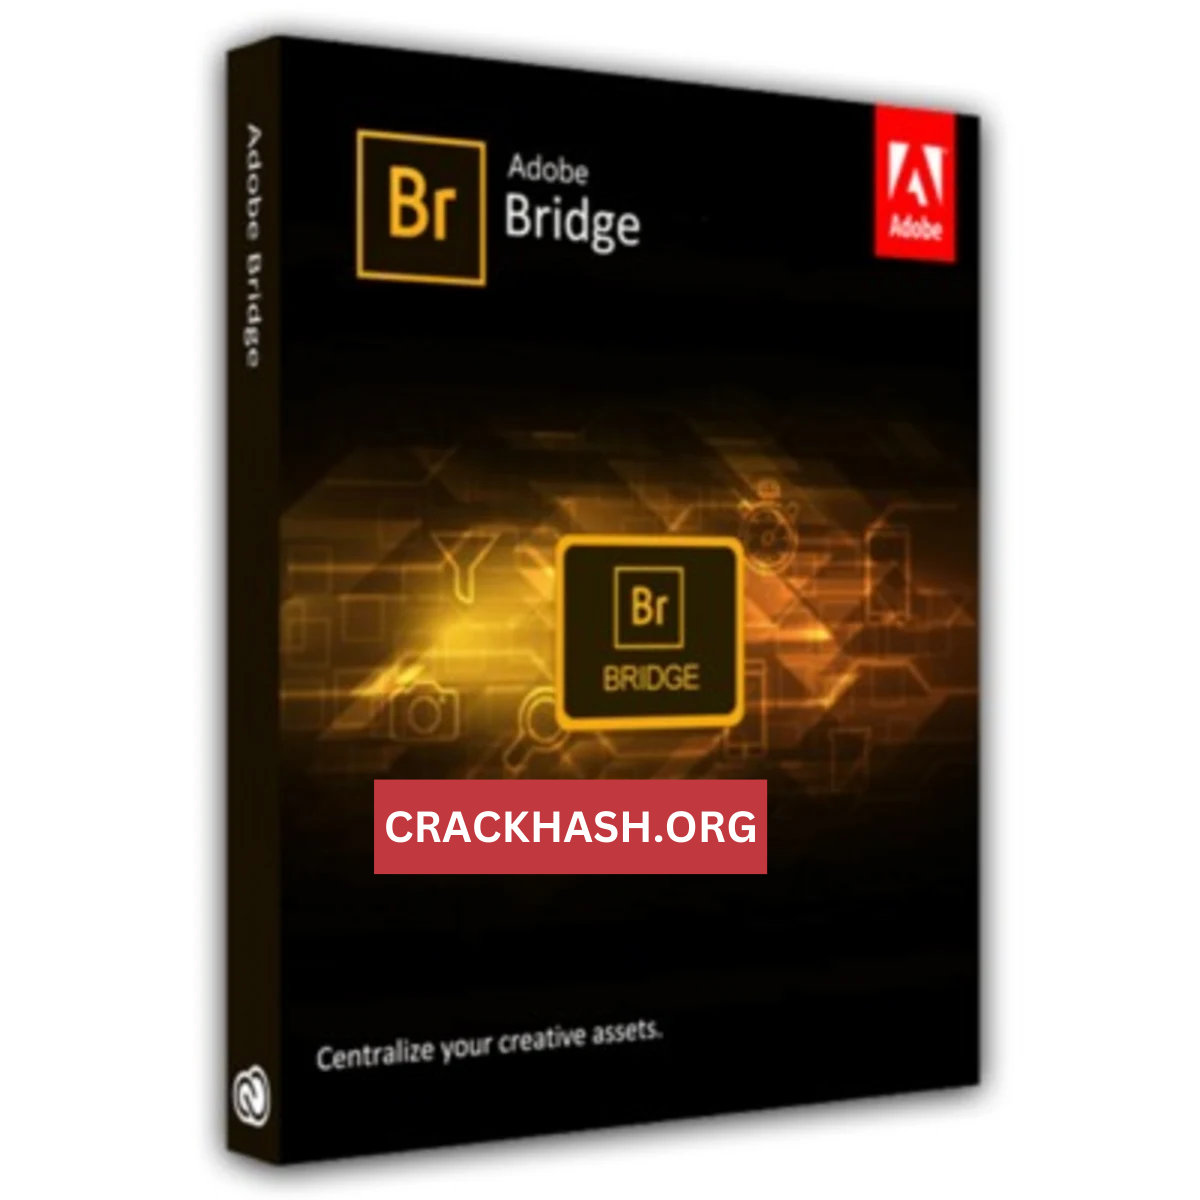 Adobe Bridge CC 2022